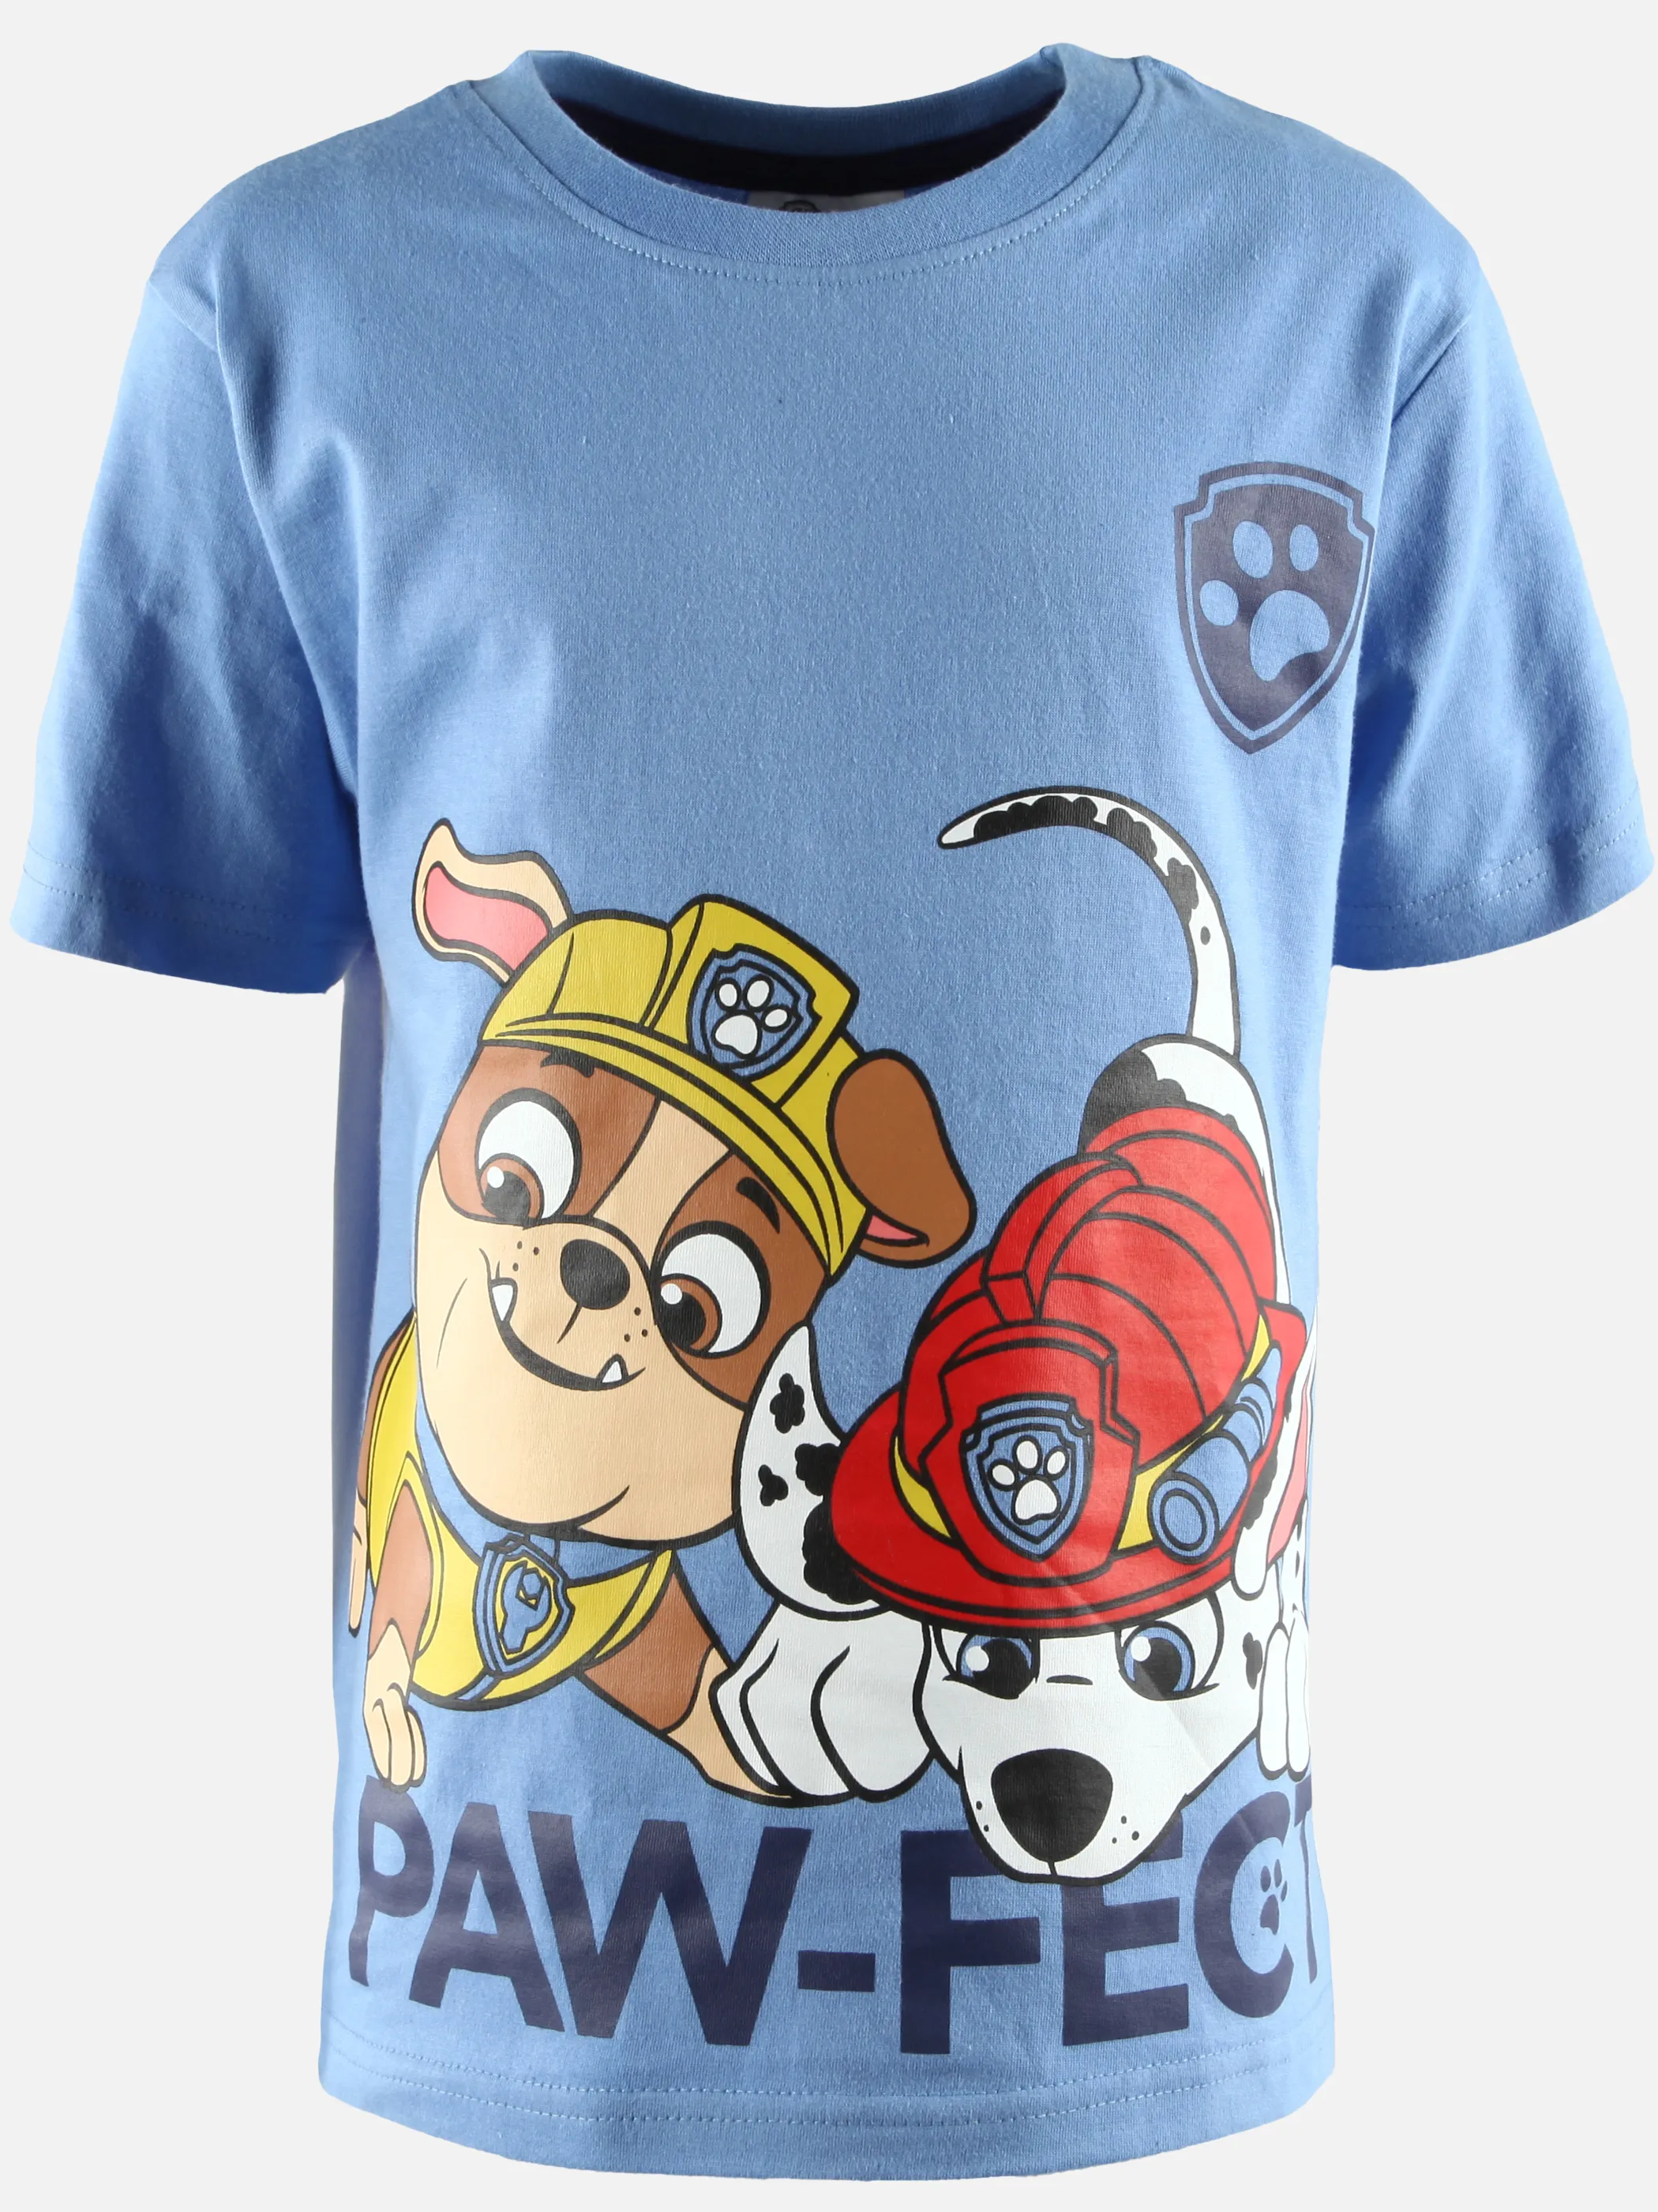 PAW Patrol KJ Paw Patrol T-shirt mit Frontdruck in blau Blau 891548 BLAU 1